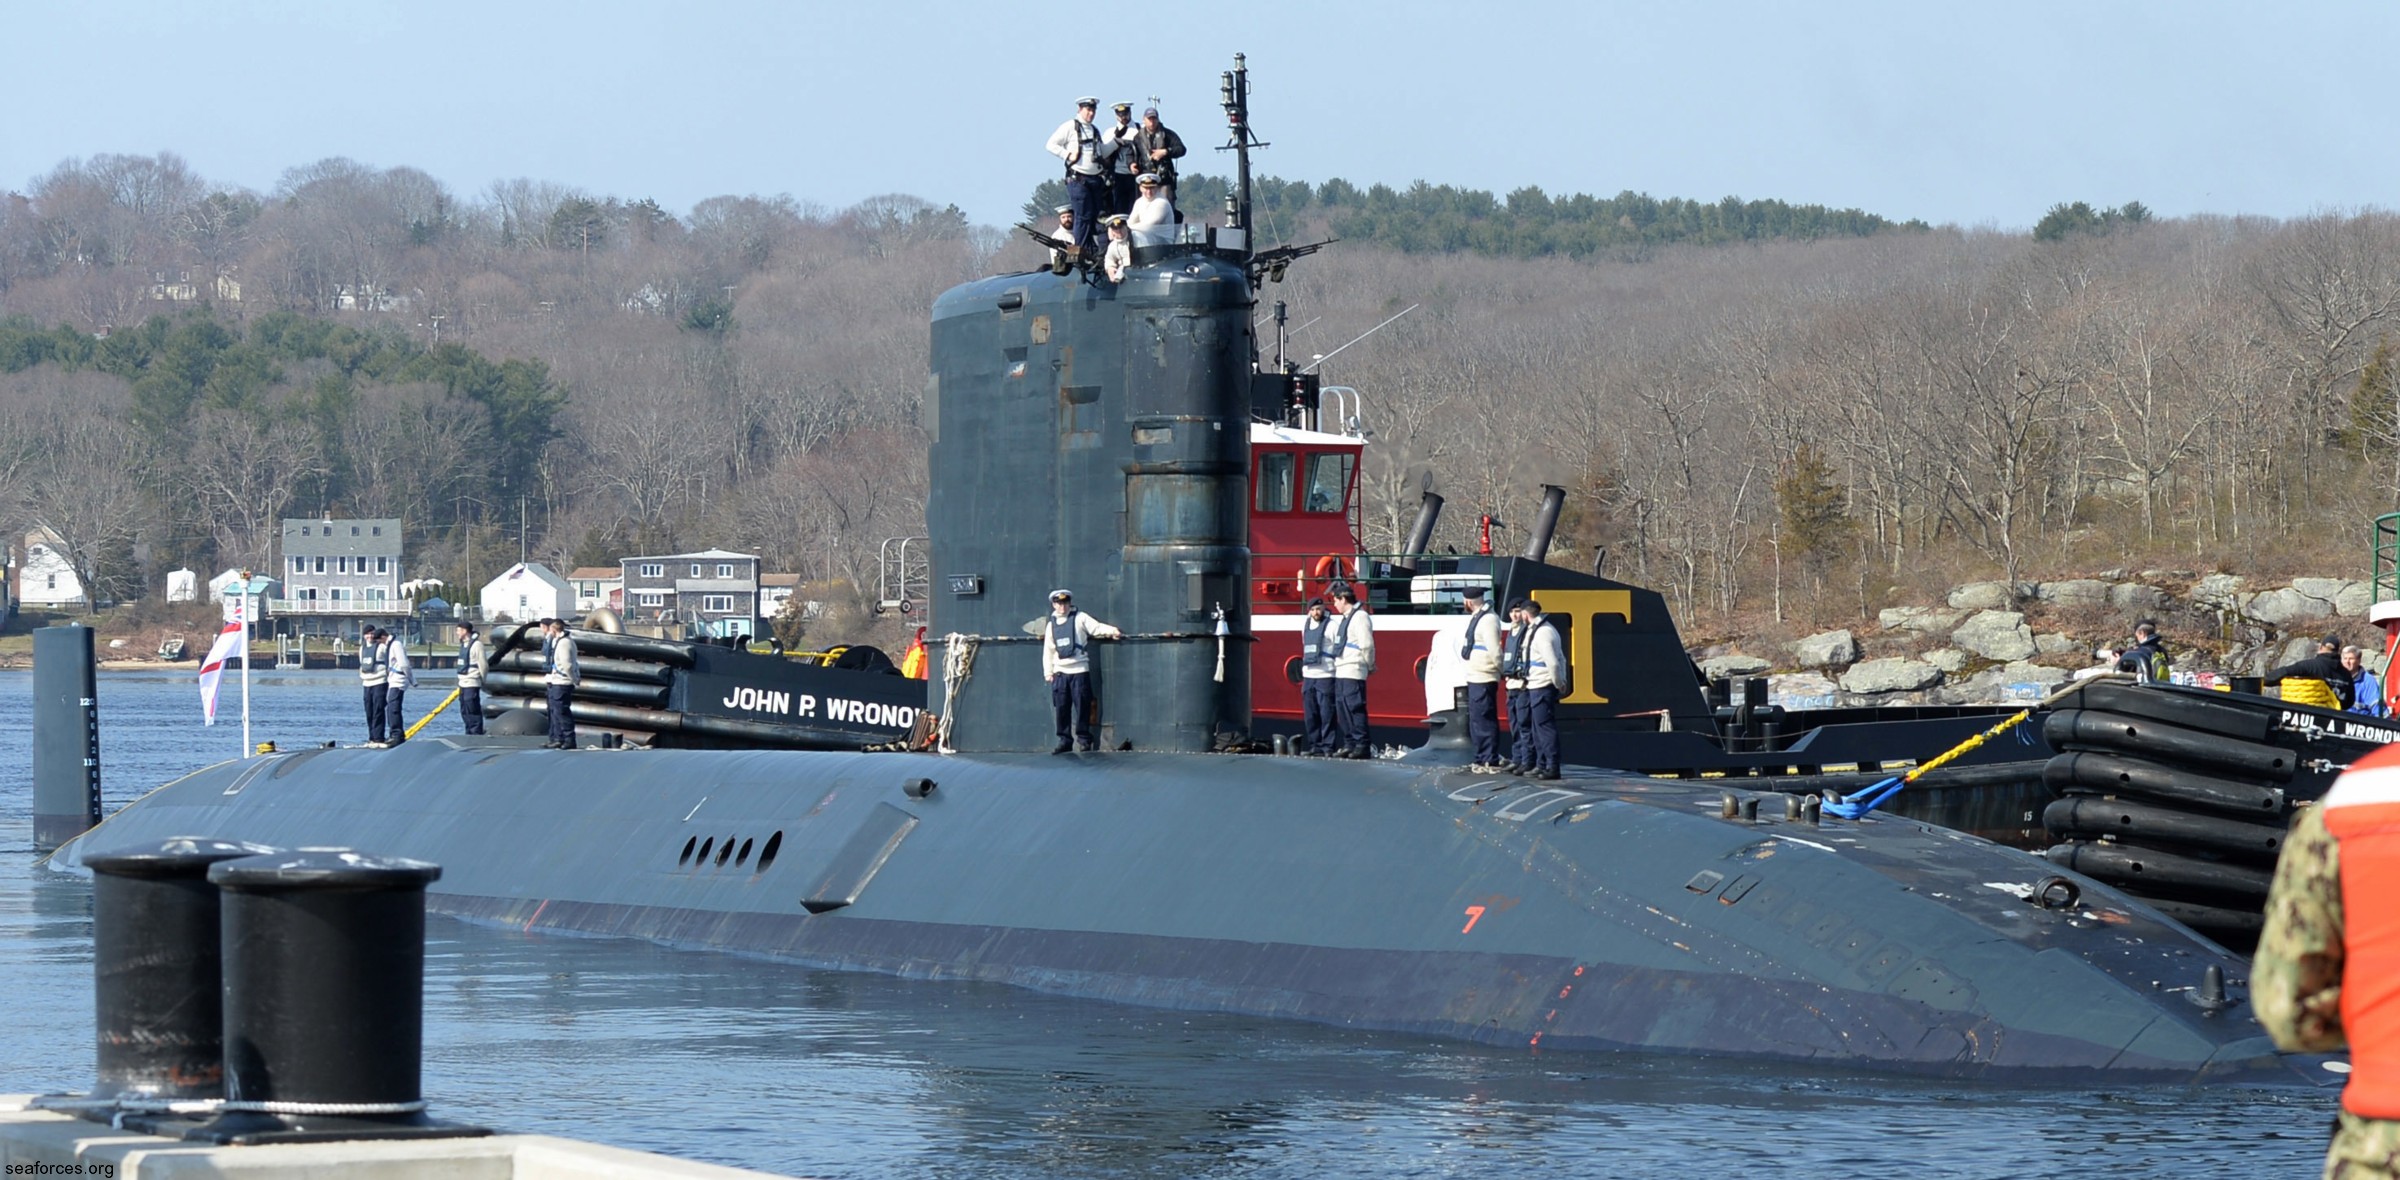 s91 hms trenchant trafalgar class attack submarine hunter killer royal navy 07